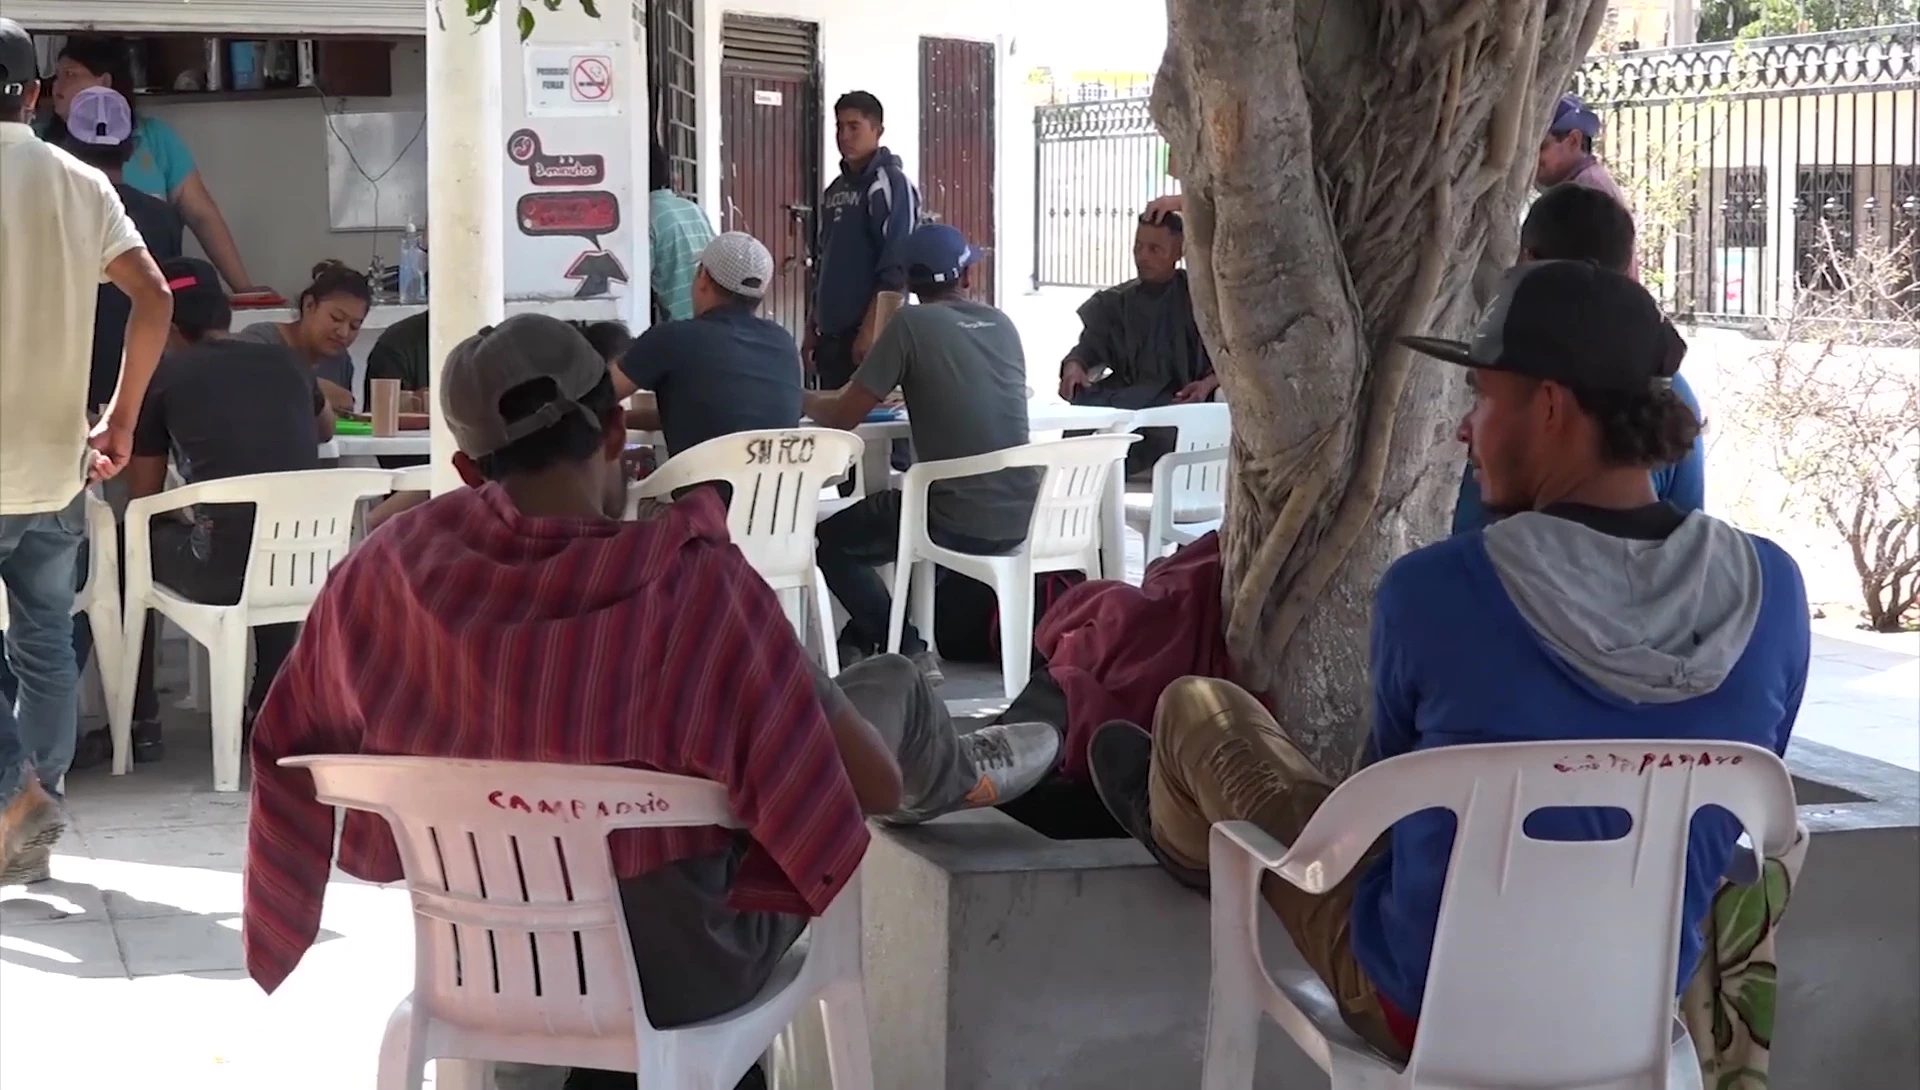 Alto número de familias migrantes son atendidas en Albergue San Francisco de Asís en Mazatlán